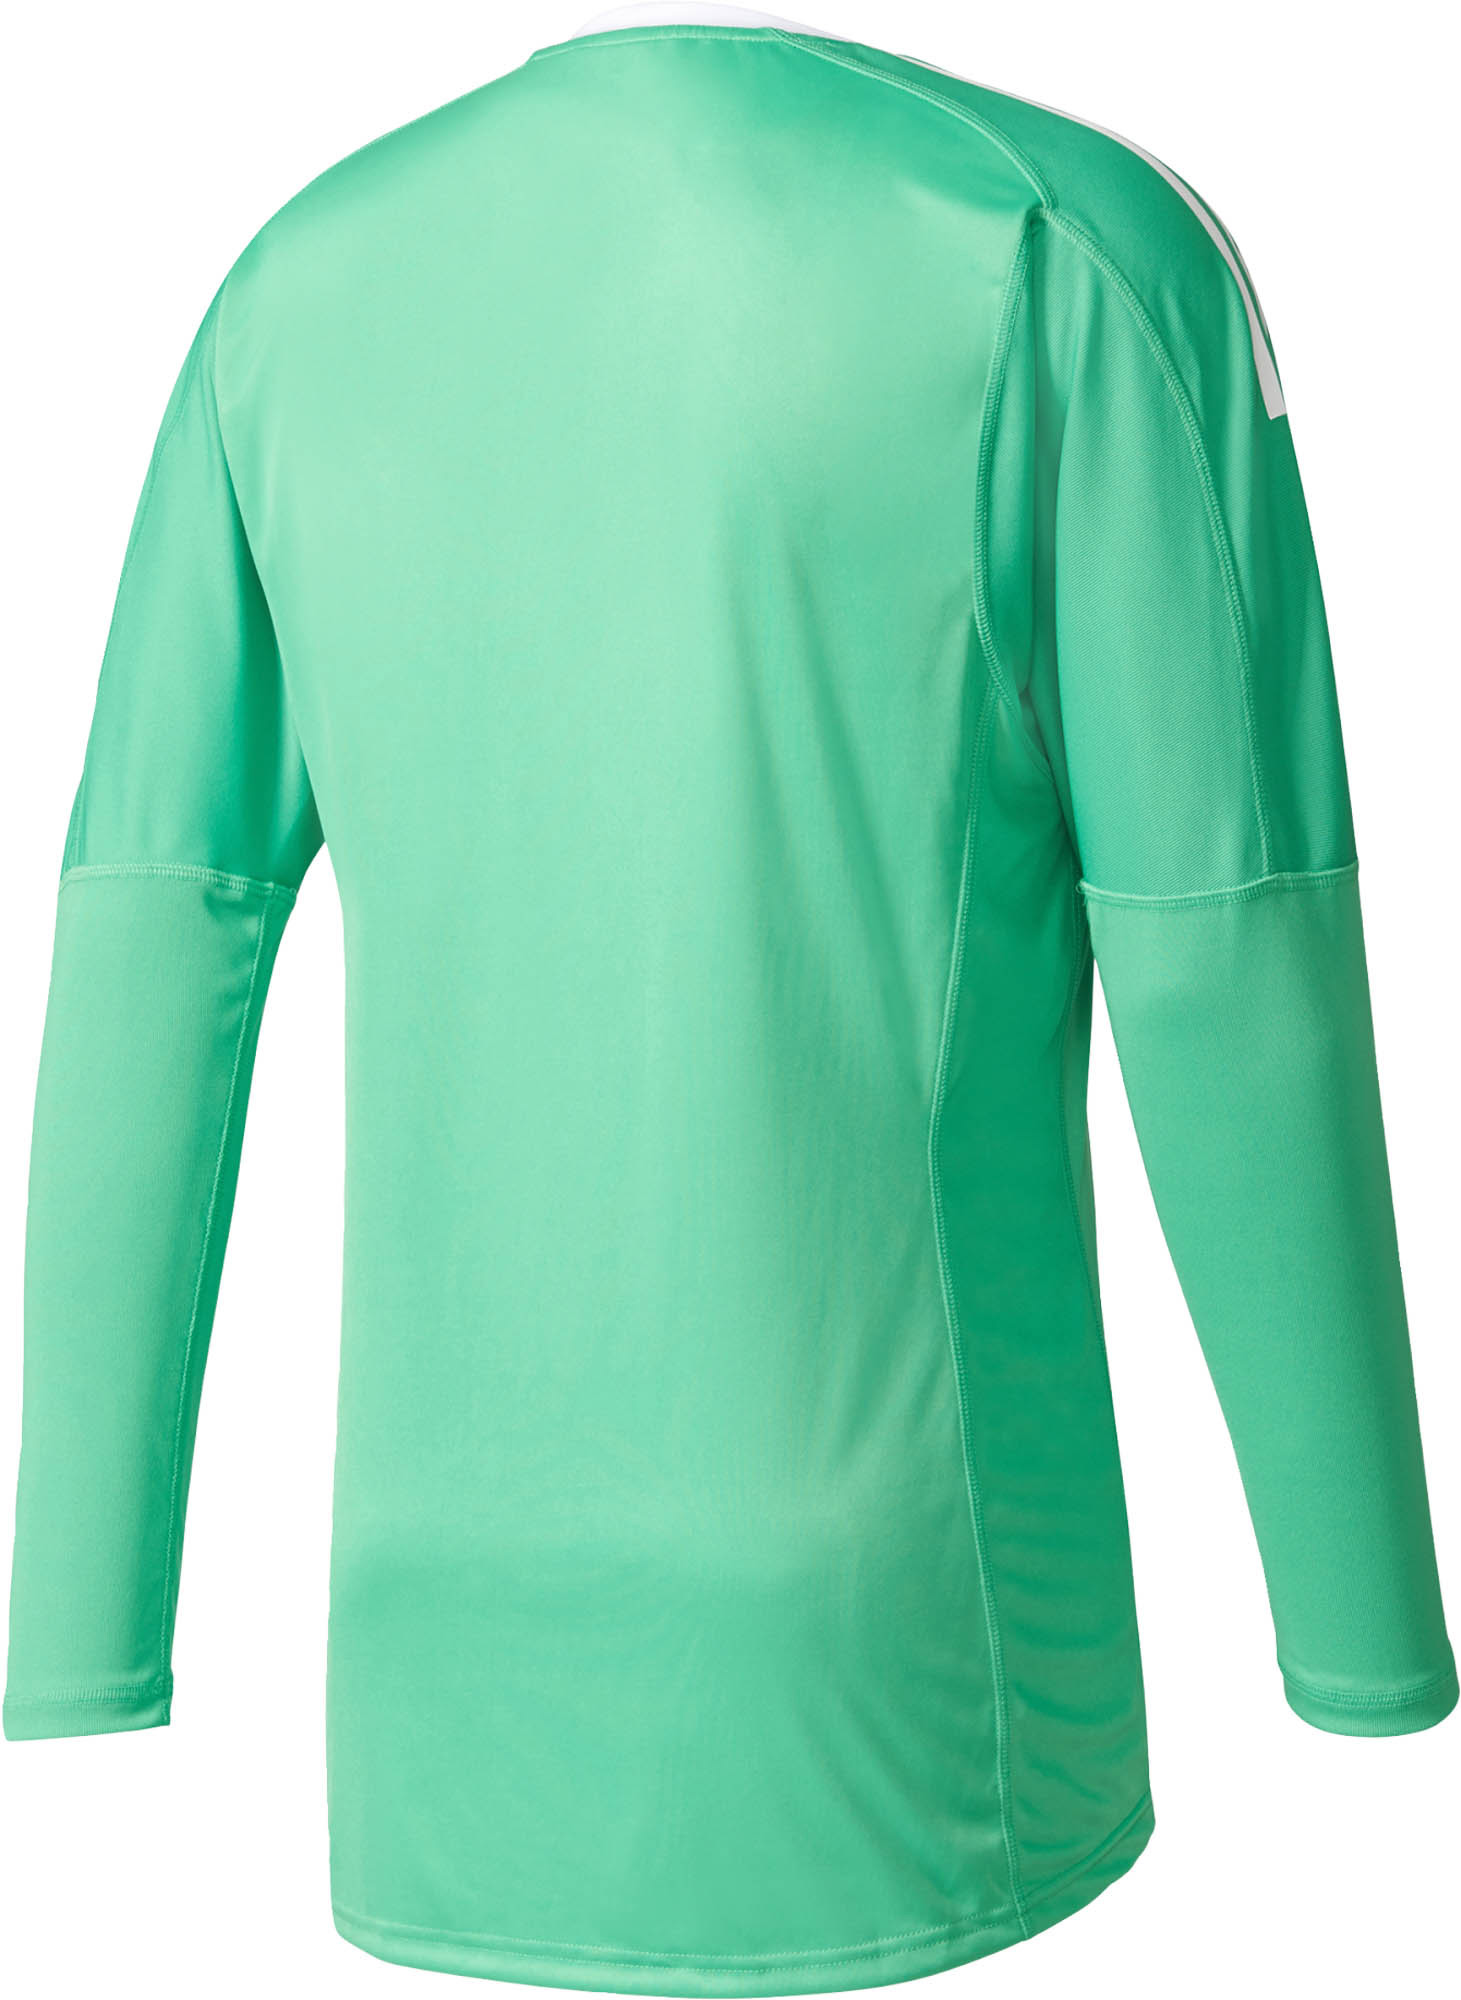 Adidas Revigo 17 S/S Goalkeeper Jersey - Bright Yellow & Energy Green